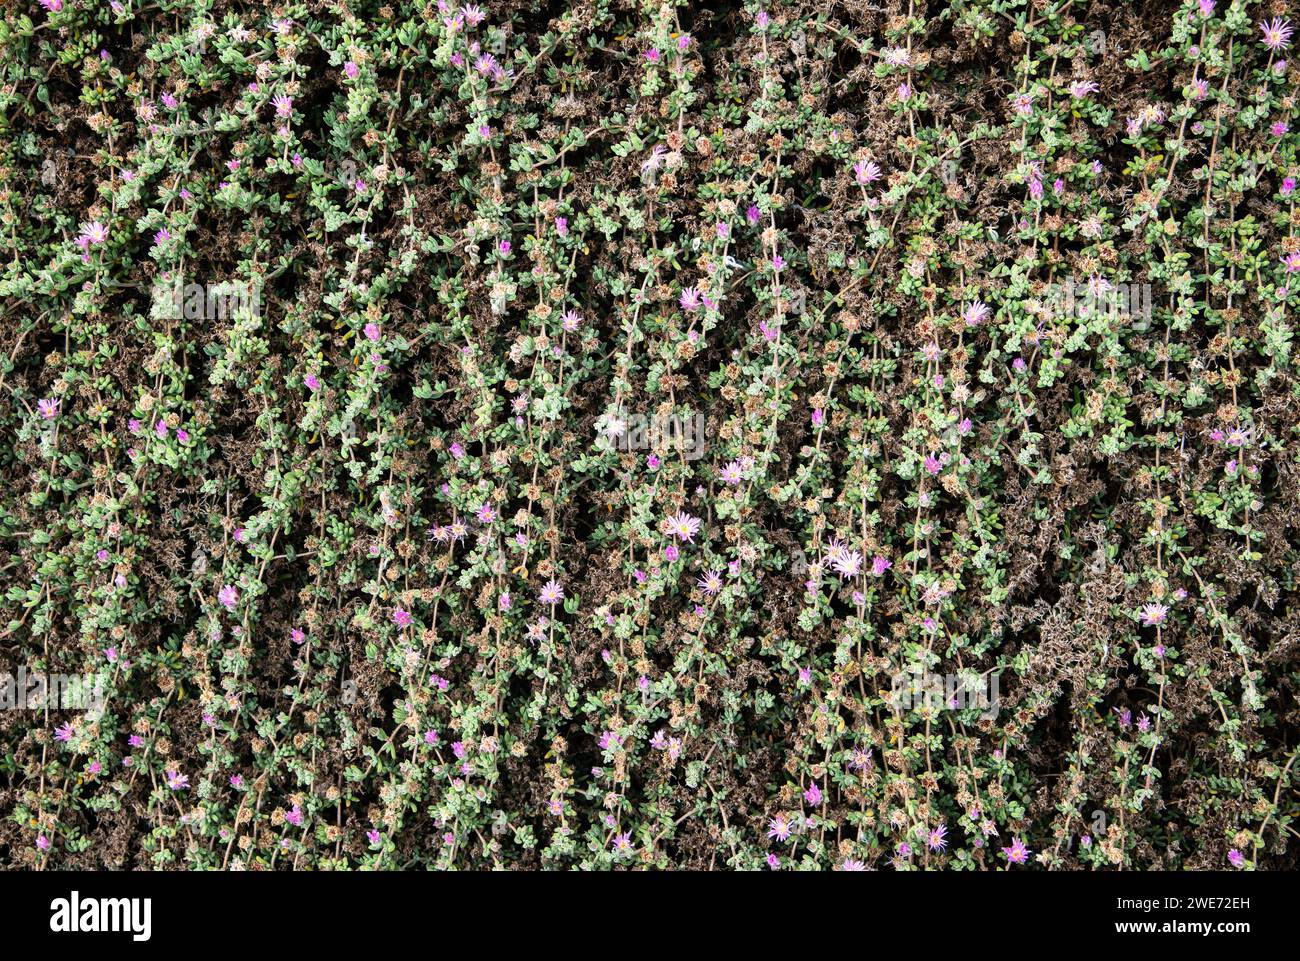 Wall of small purple climbing flowers Stock Photo